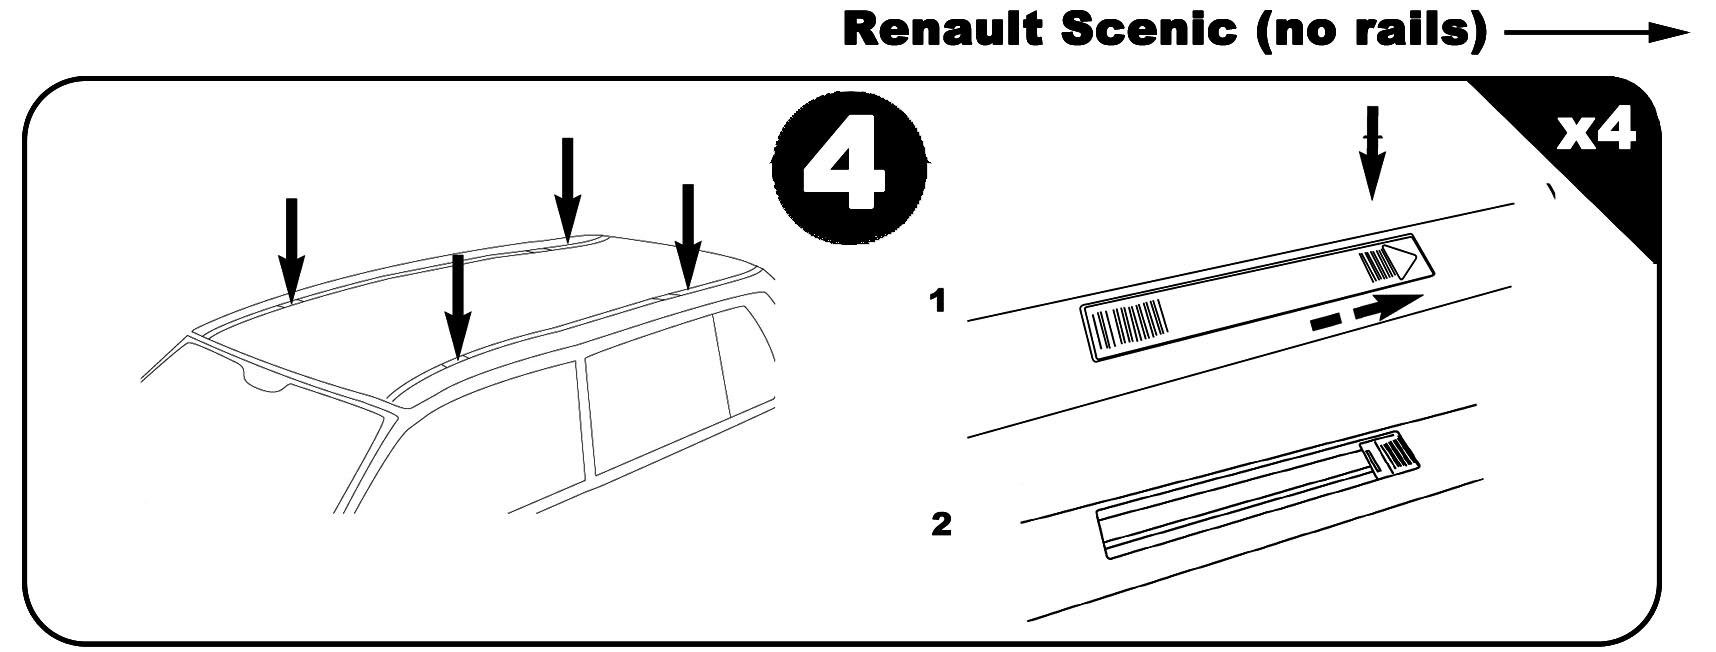 VDPJUXT500 Dachbox VDP abschließbar schwarz 1996-2003), kompatibel Dachträger (5Türer) Renault für 1996-2003 + Dachbox, Aurilis (Passend (5Türer) Aluminium Original Scenic Renault Scenic I I 500Ltr mit